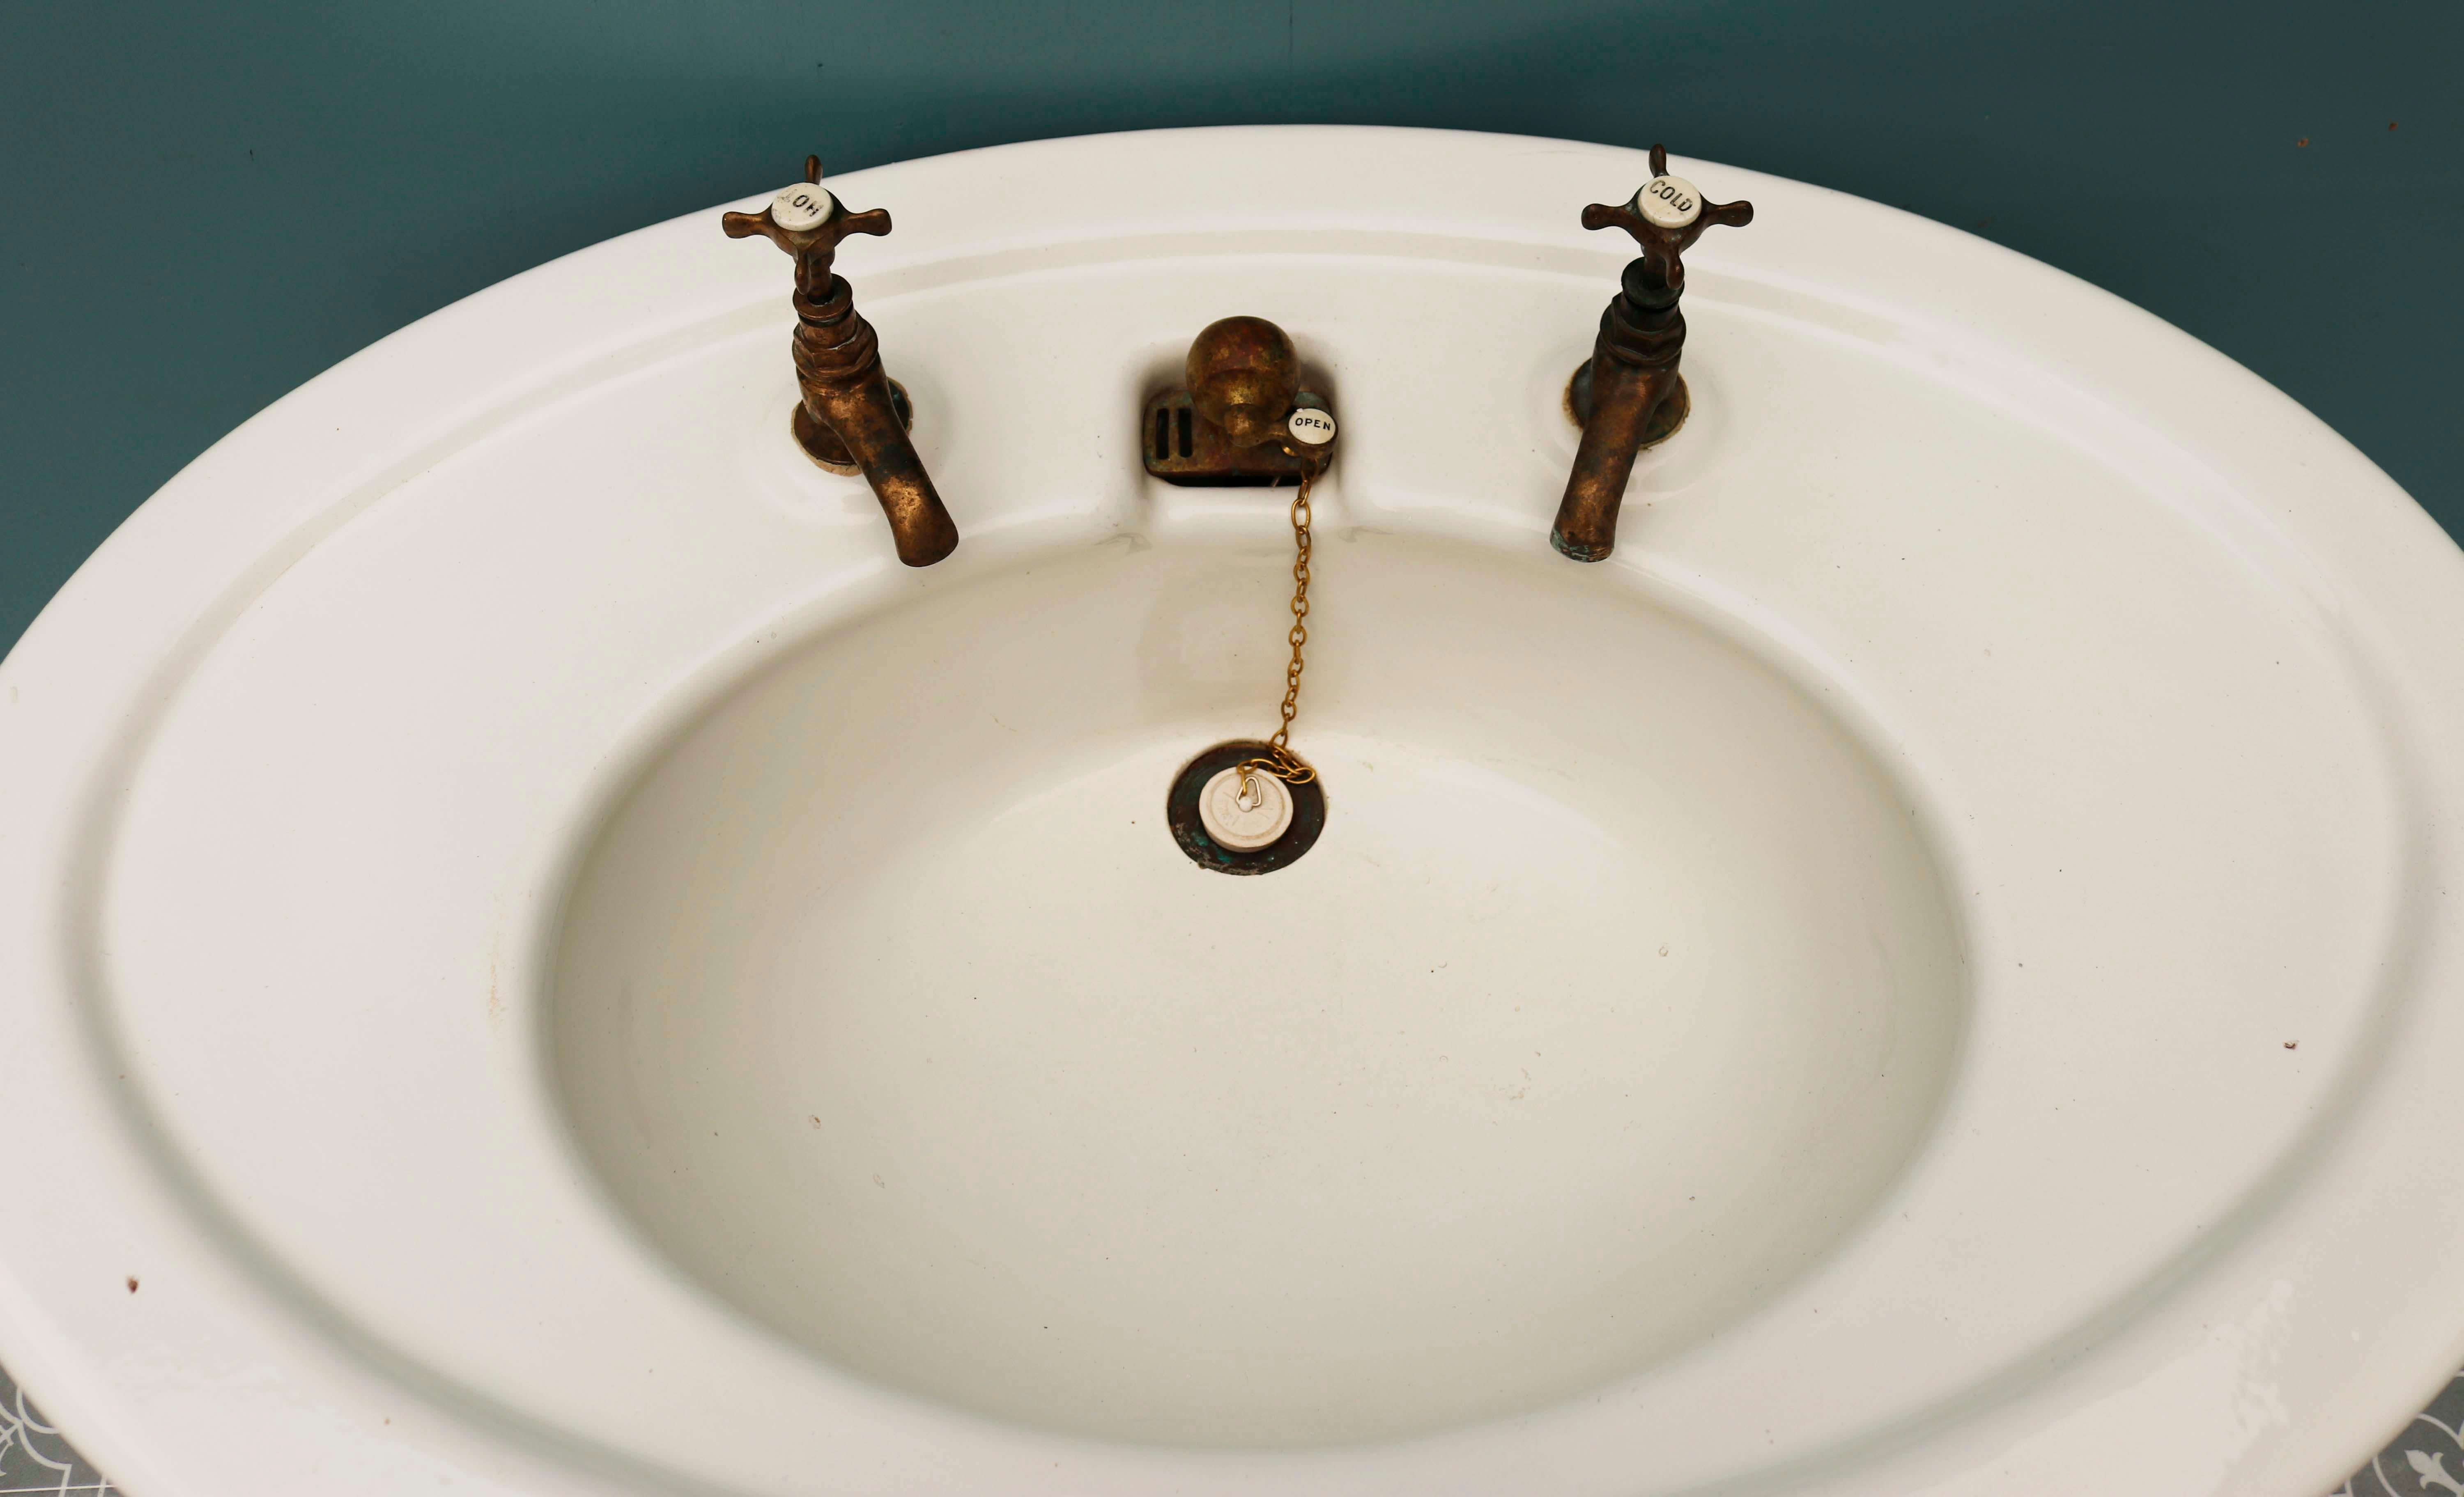 Stoneware Antique Oval Shaped Pedestal Sink